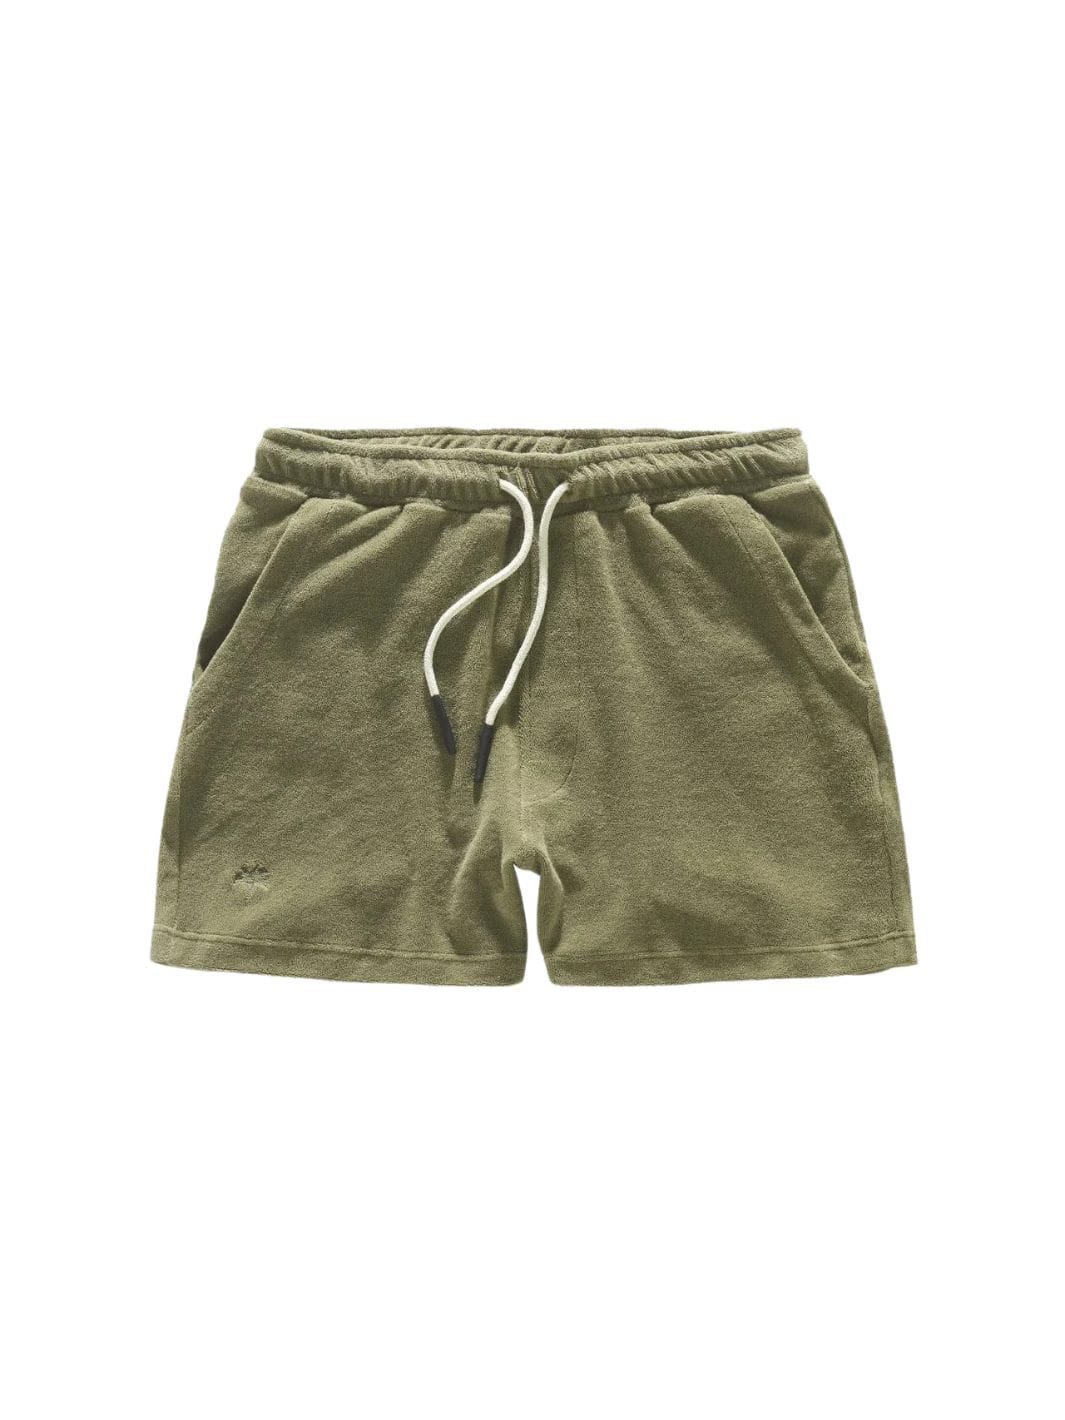 Oas Shorts Shorts | Terry Shorts Khaki